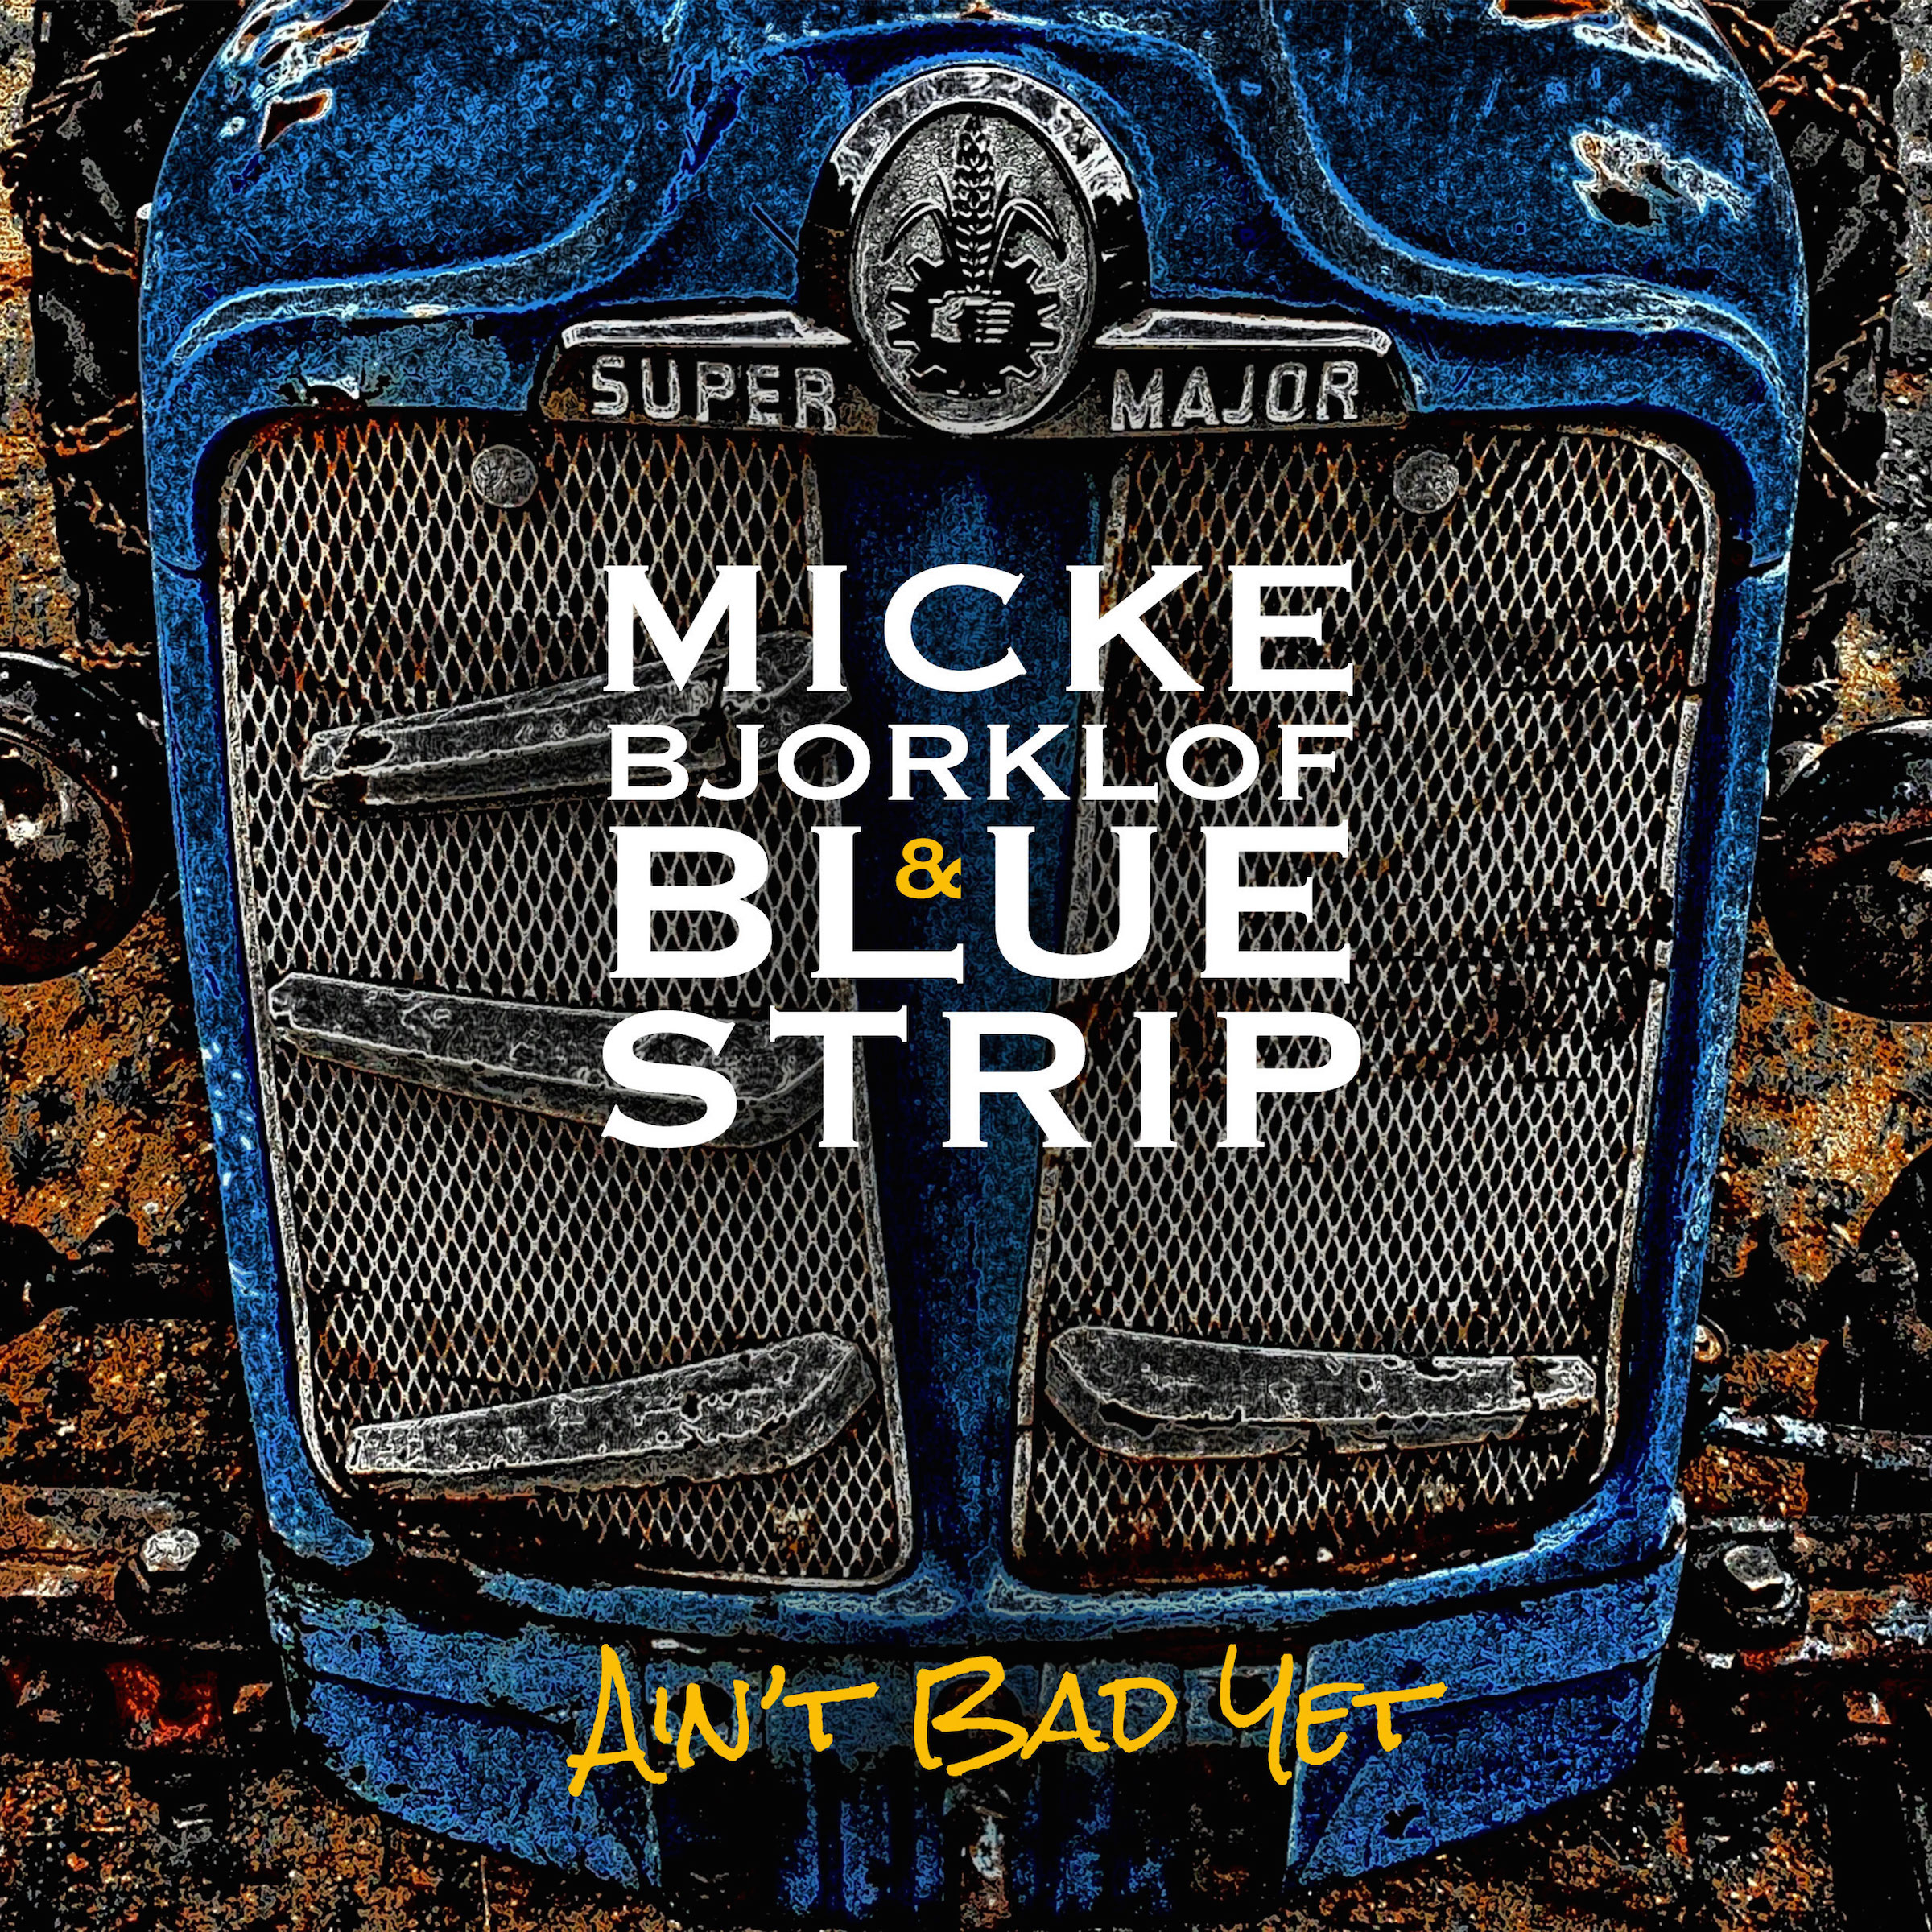 Micke Bjorklof & Blue Strip - Ain't Bad Yet - CD